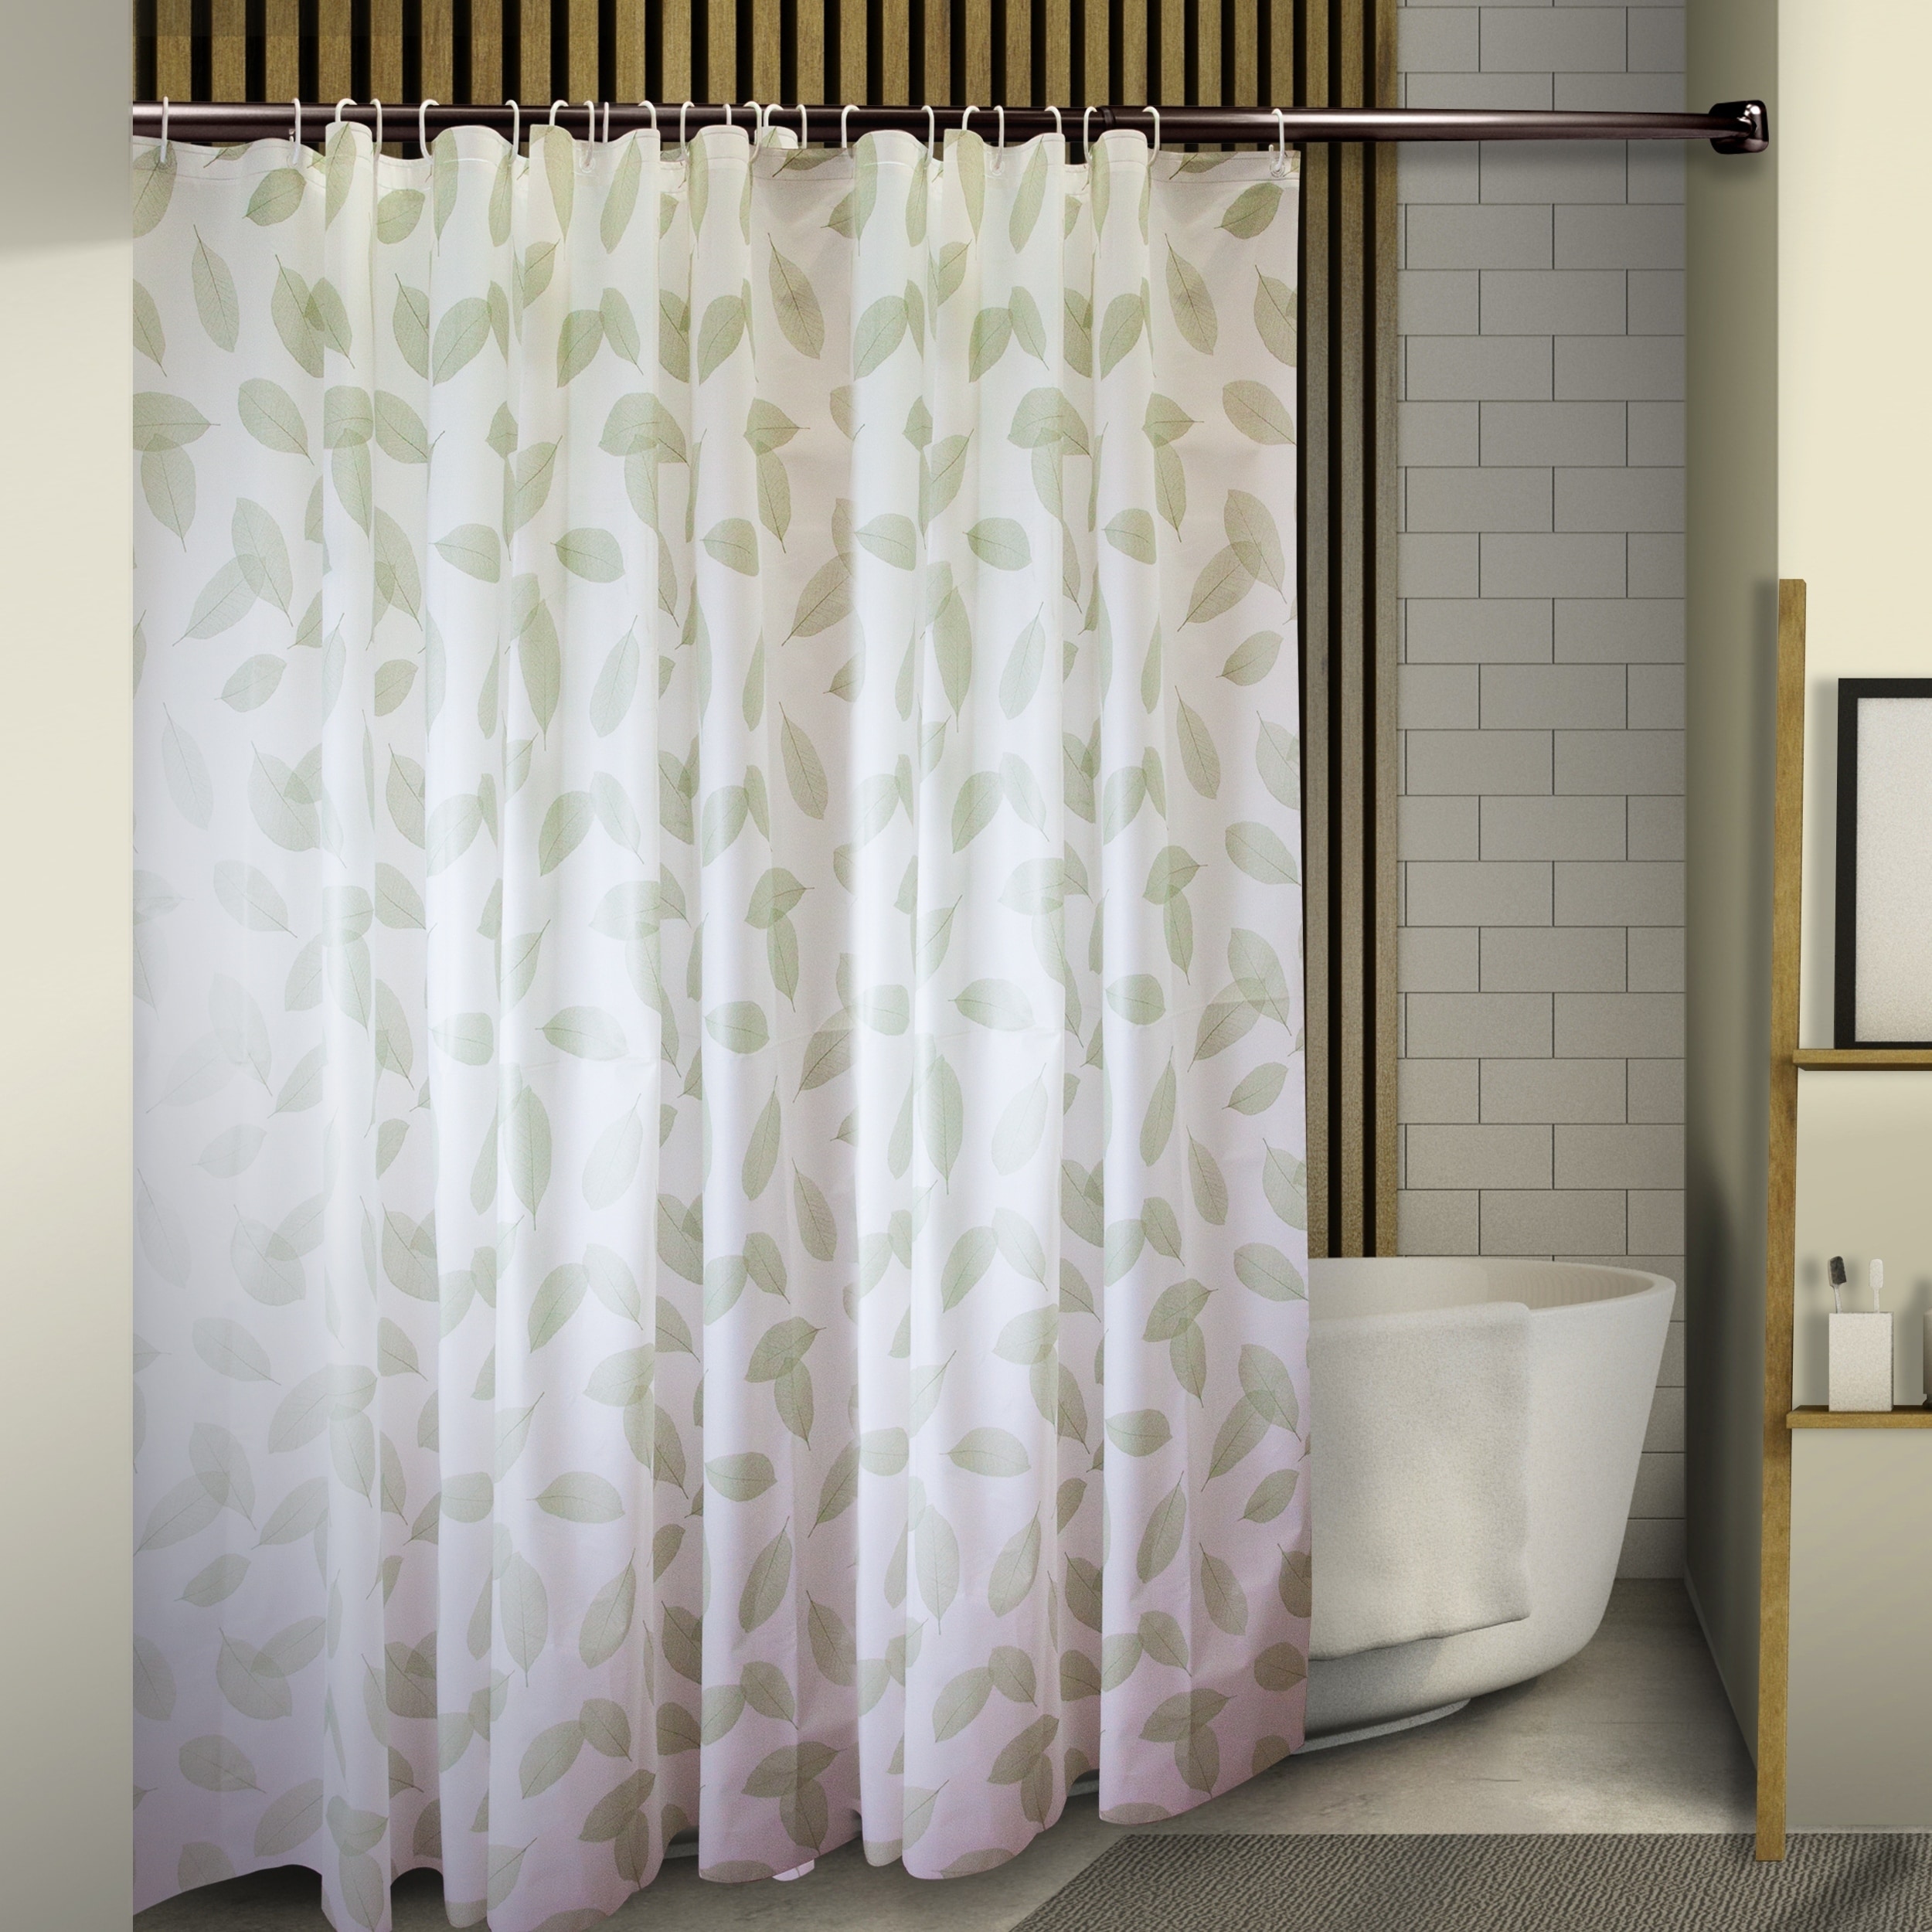 Geranium Flowers and Leaves Waterproof Bathroom Fabric Shower Curtain 71" 